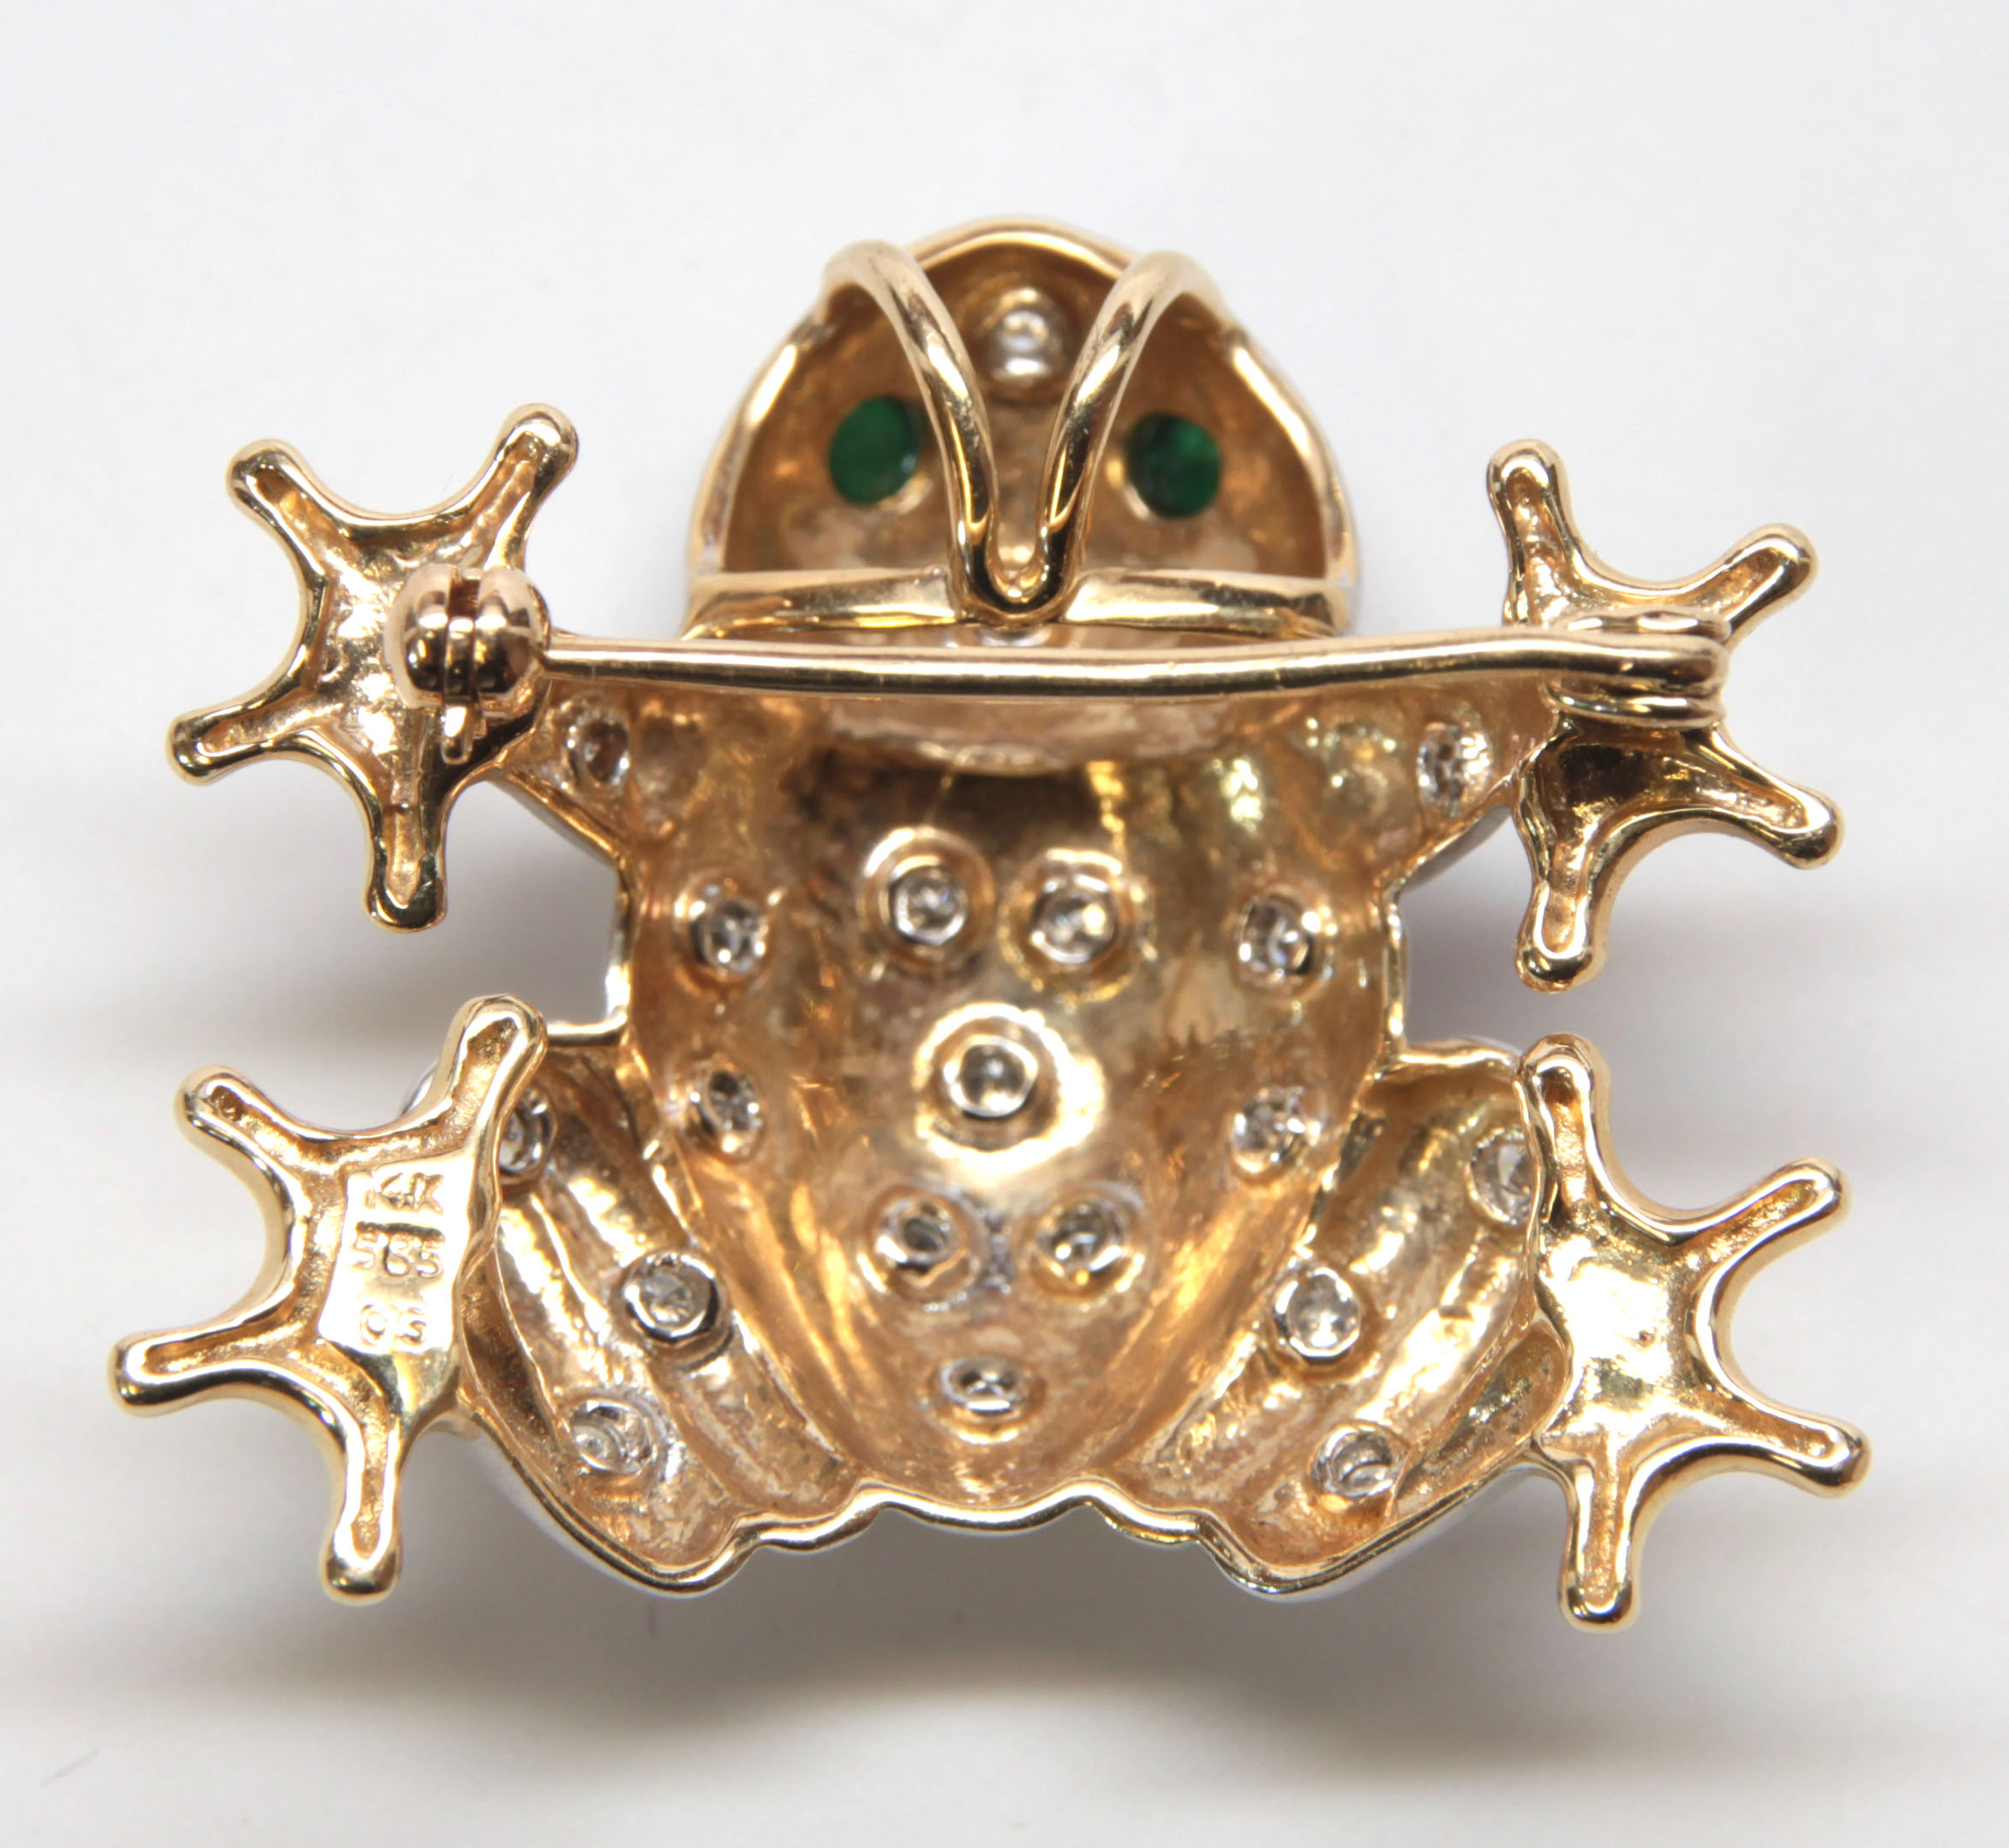 Diamond, emerald, 14k gold frog pendant-brooch - Image 2 of 4